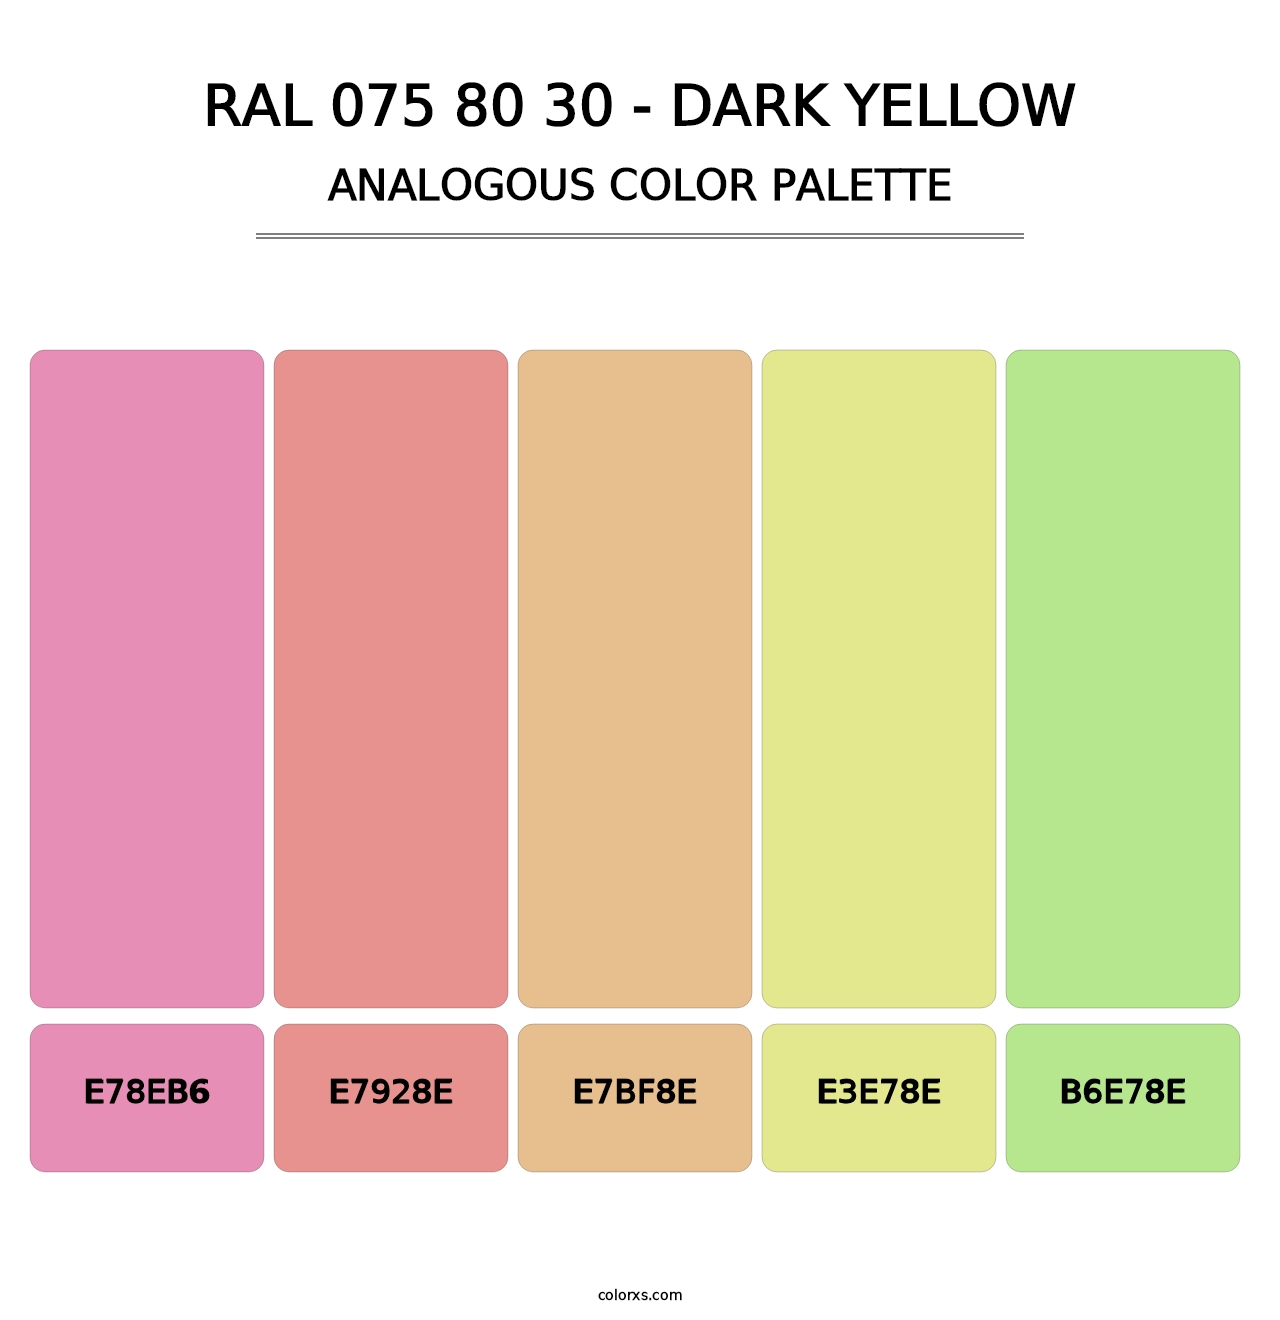 RAL 075 80 30 - Dark Yellow - Analogous Color Palette